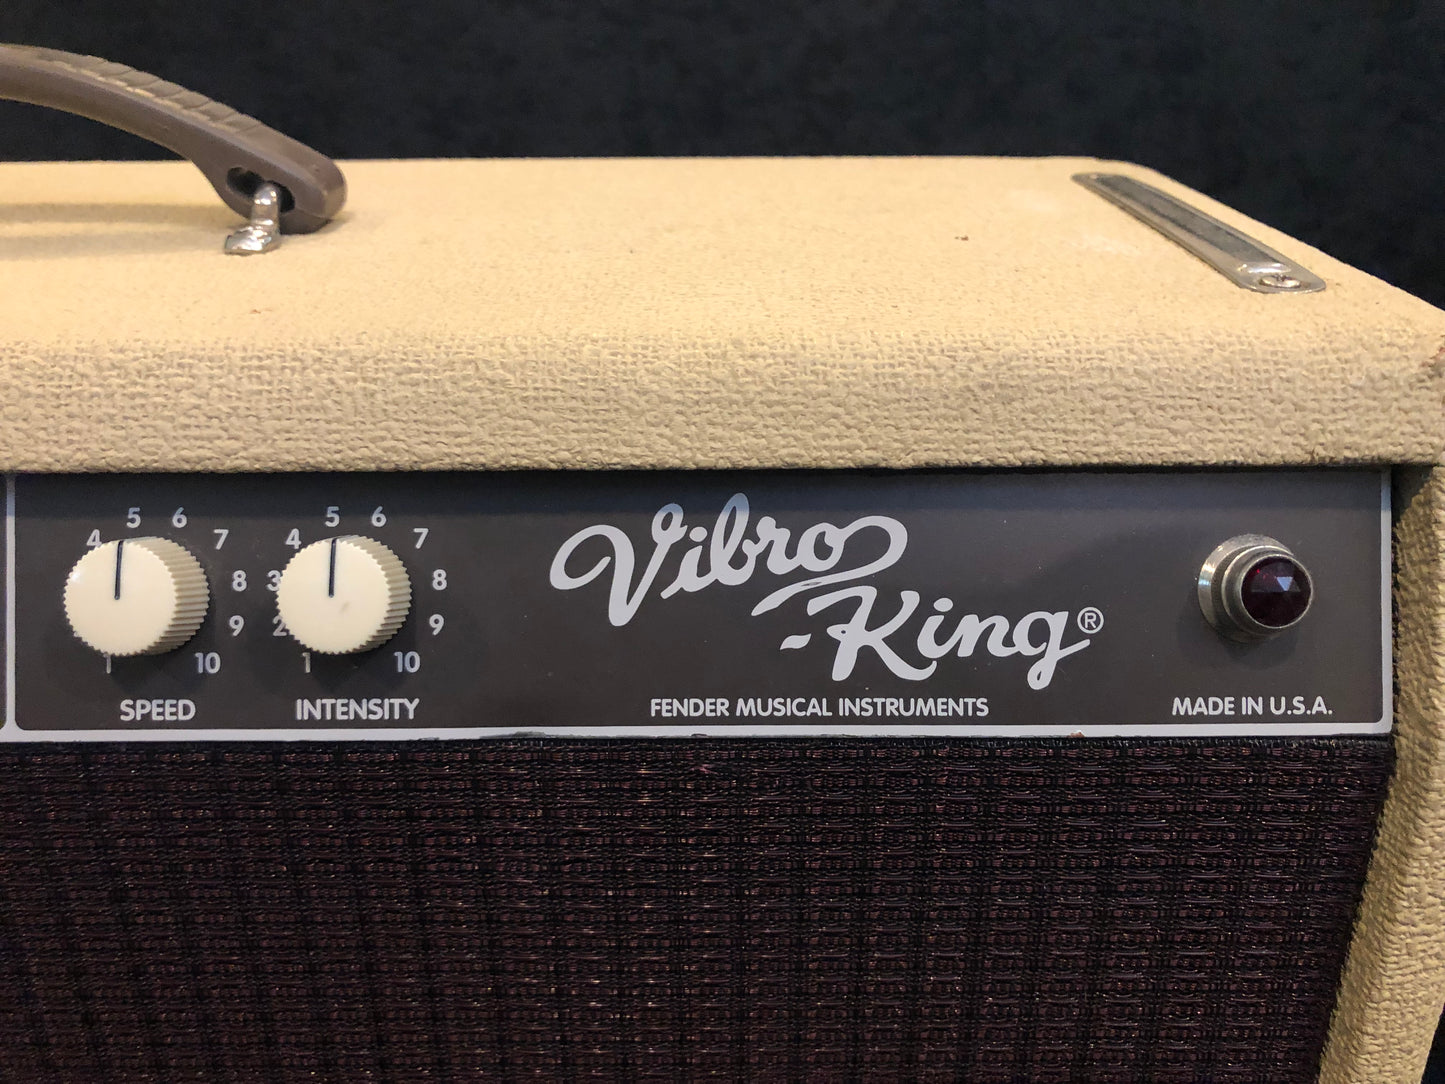 Fender Vibro-King Guitar Combo Amplifier Blonde 1990s CSR 4